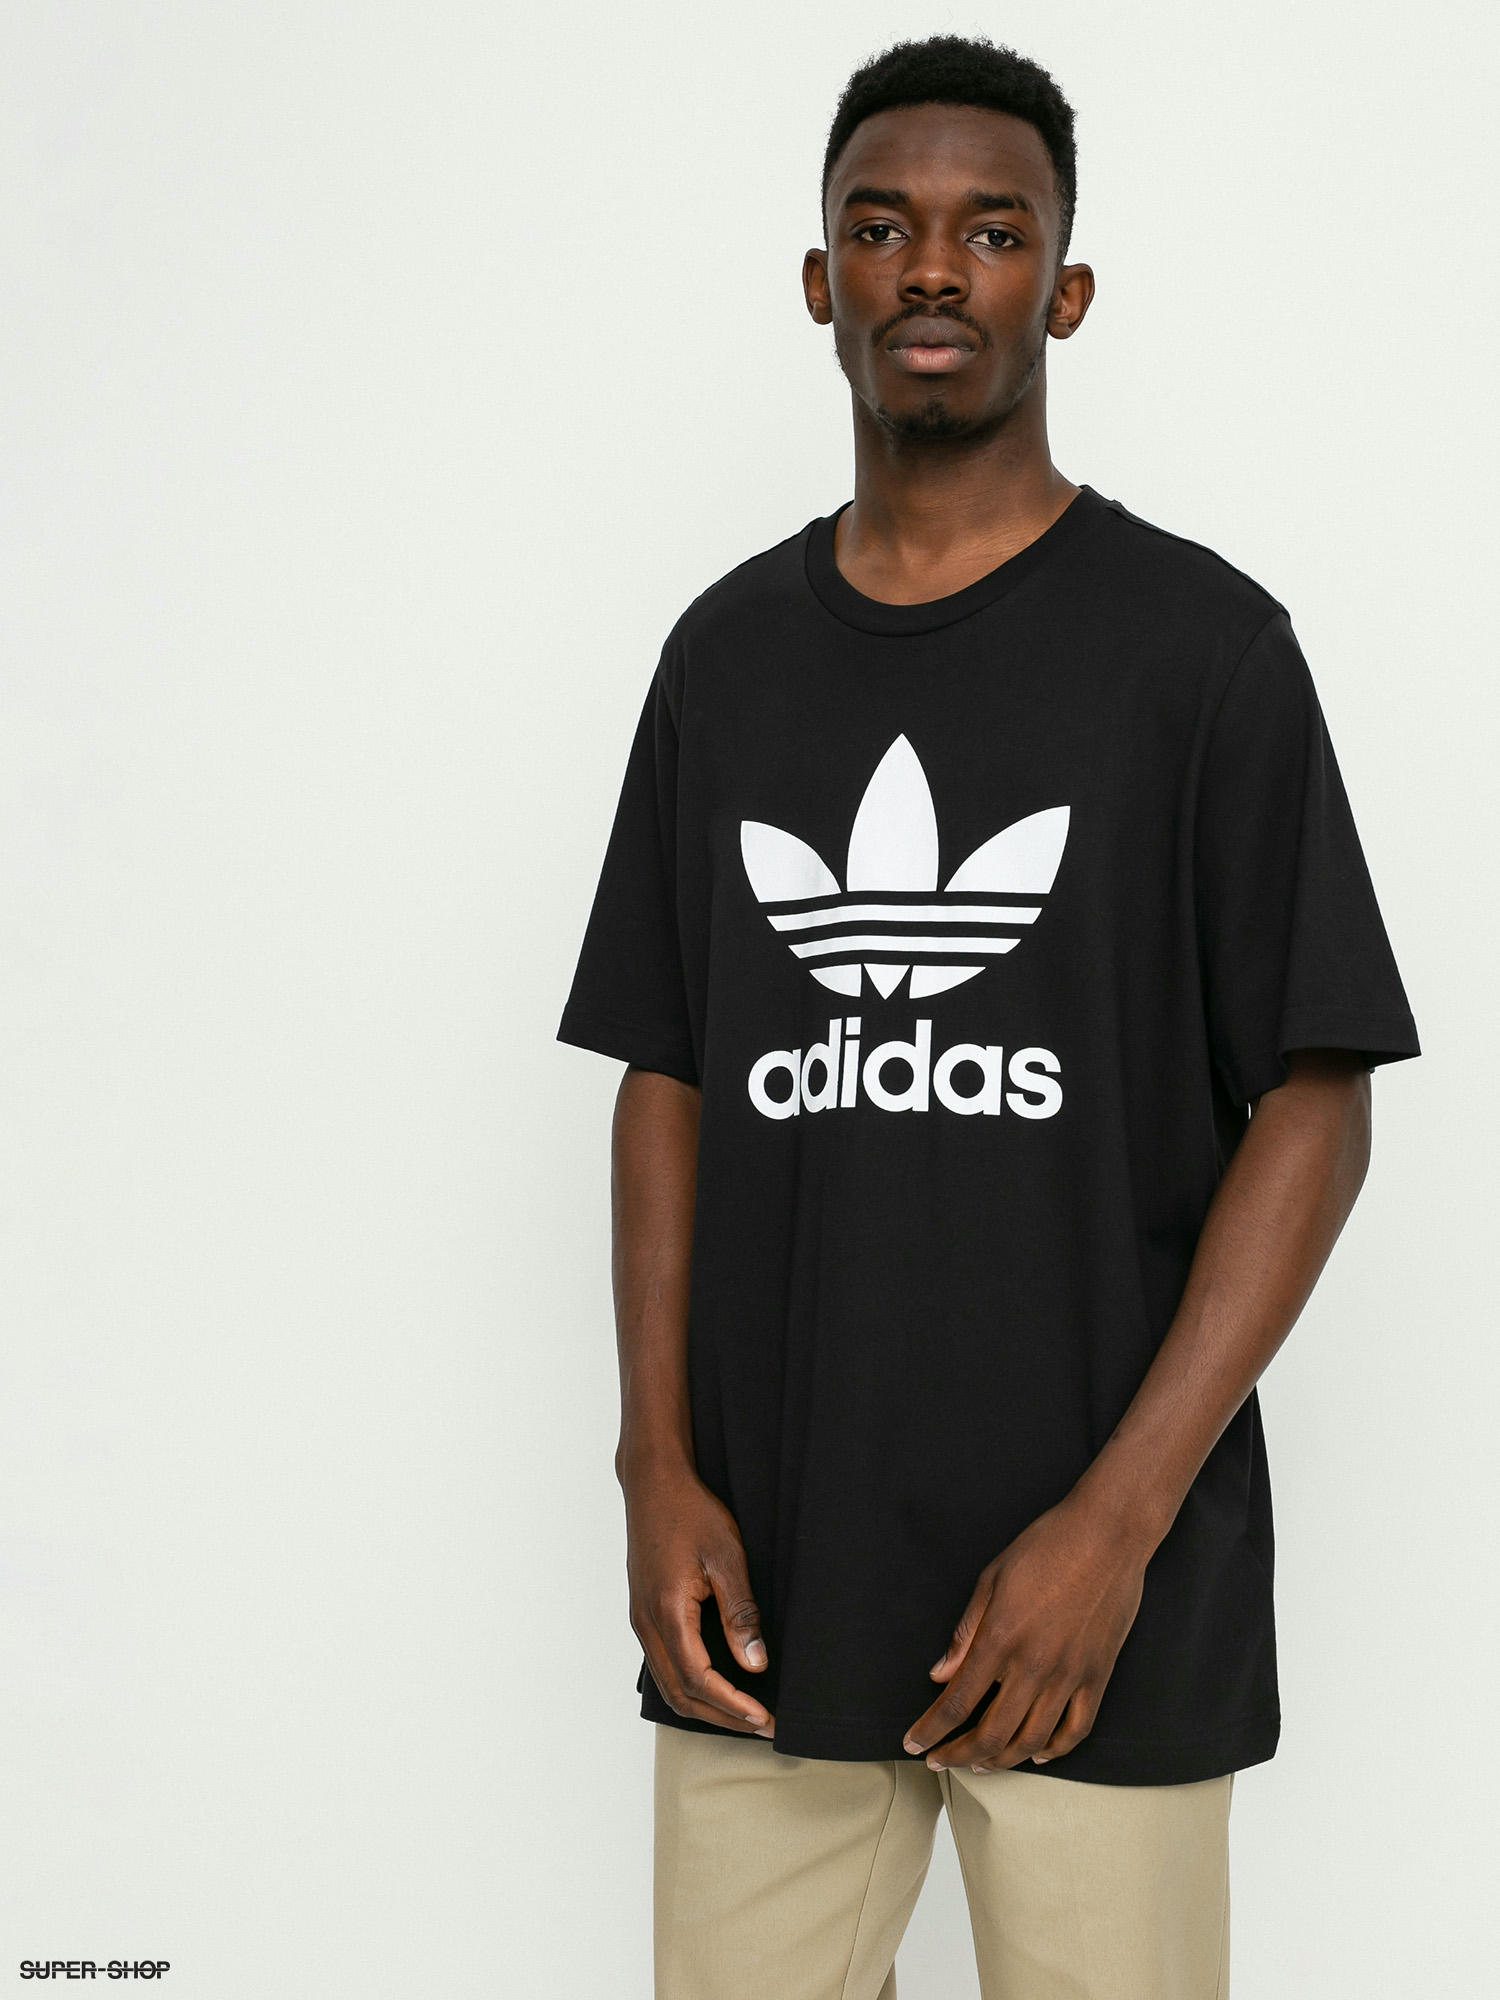 Trefoil adidas T-shirt (black/white) Originals